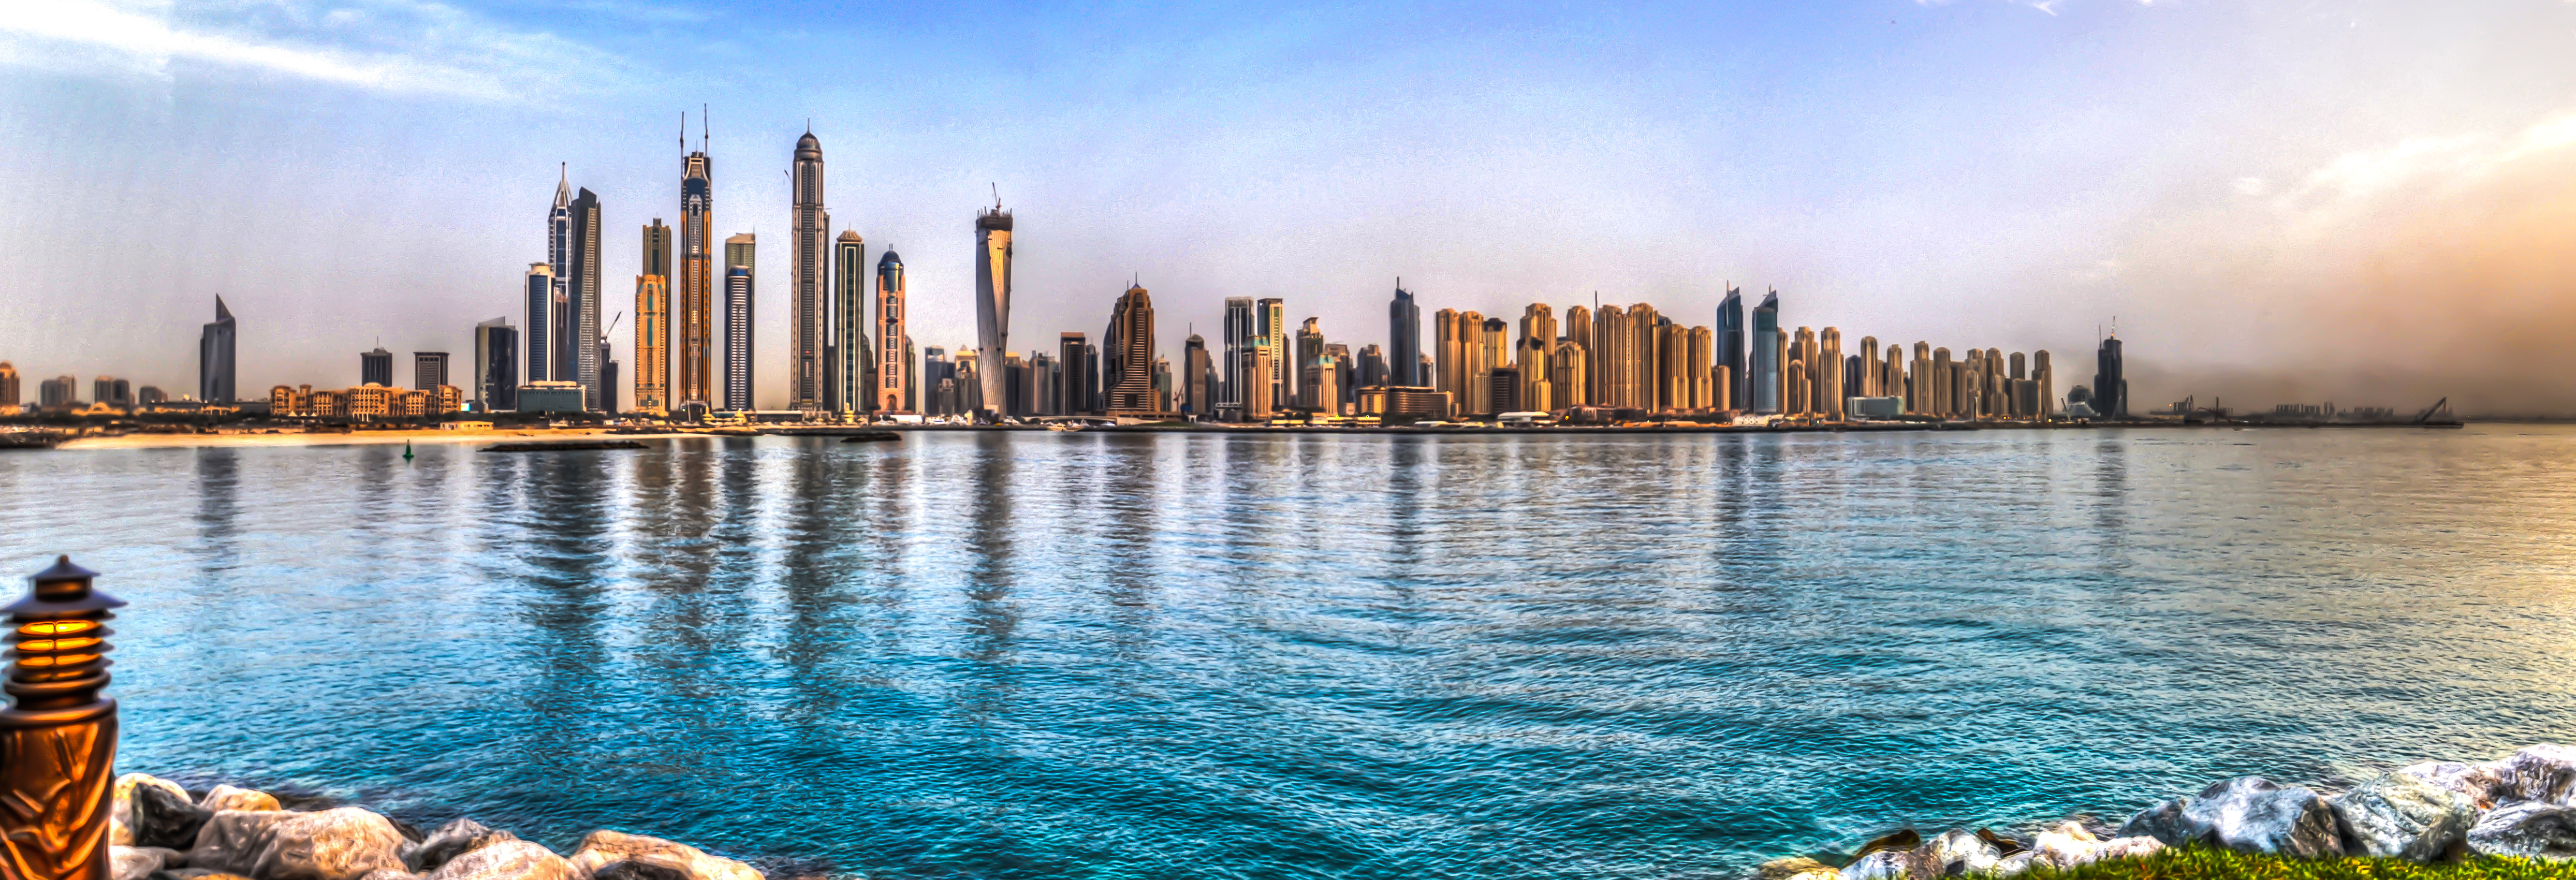 Dubai marina HDR skyline